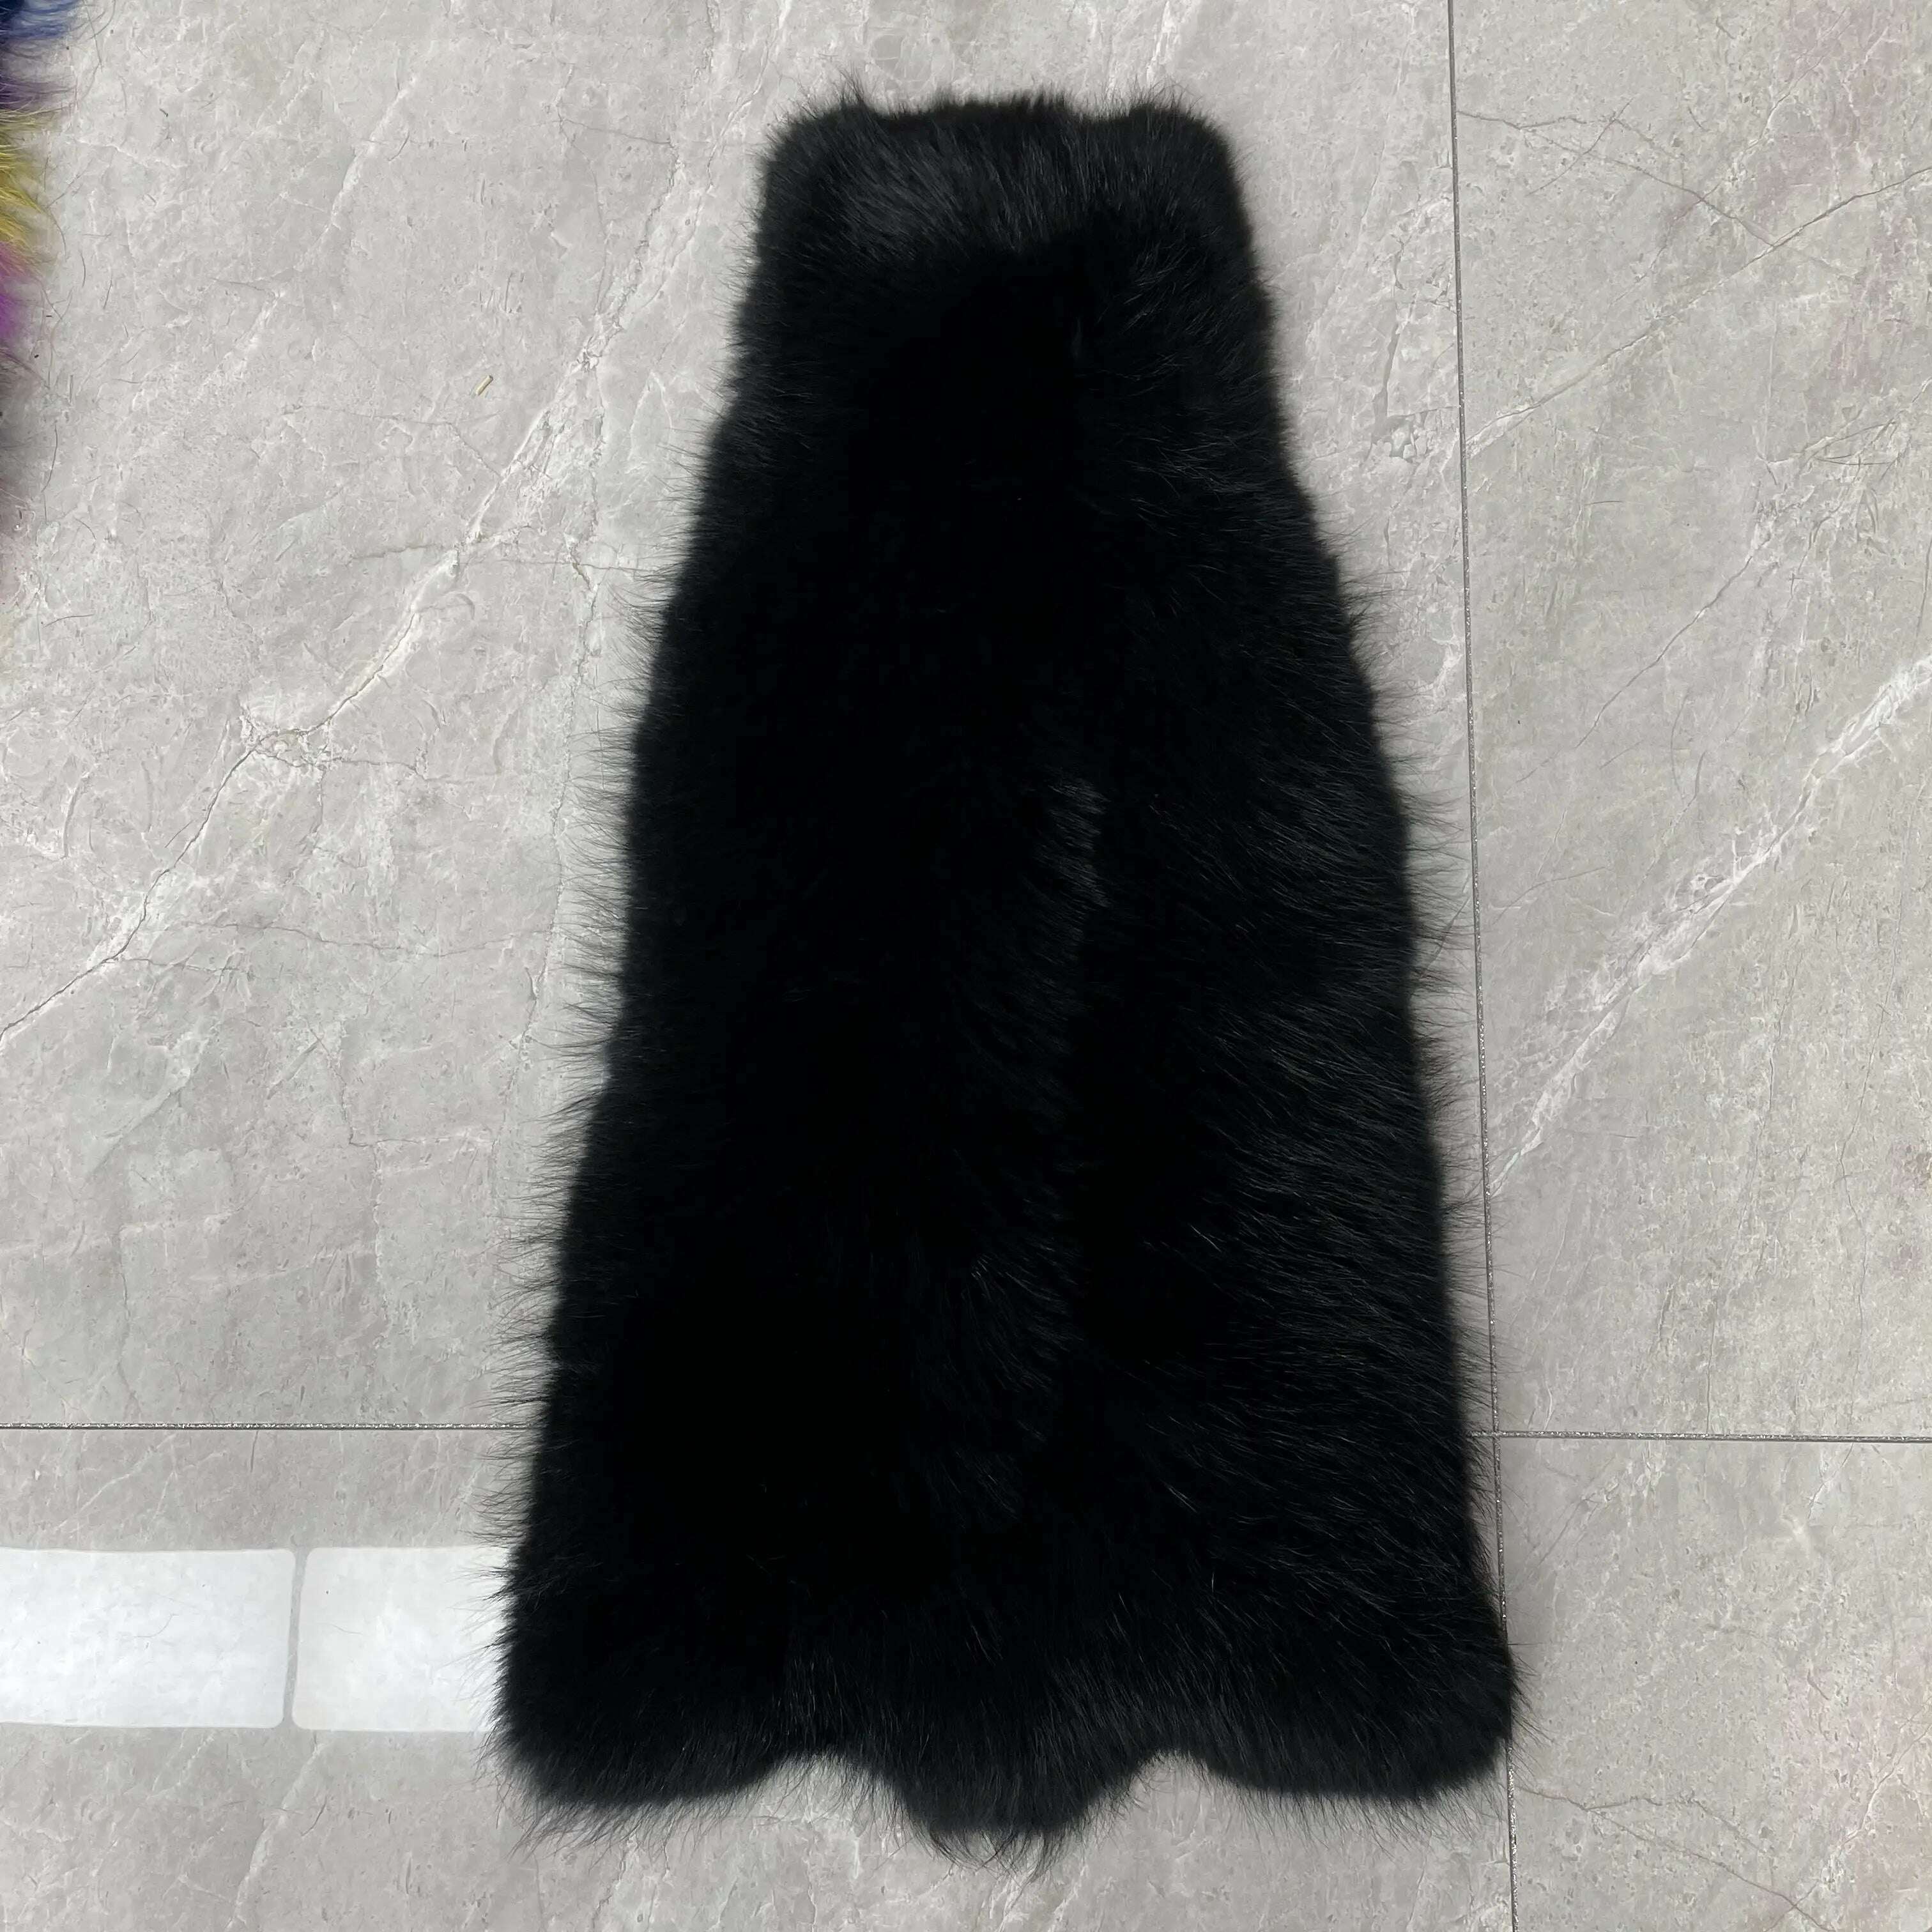 KIMLUD, Wholeskin Men Golden Fox Fur Long Coats Shawl Collar Winter Overcoats Genuine Natural Fox Furs Jacket, Black / XS(88cm), KIMLUD Womens Clothes